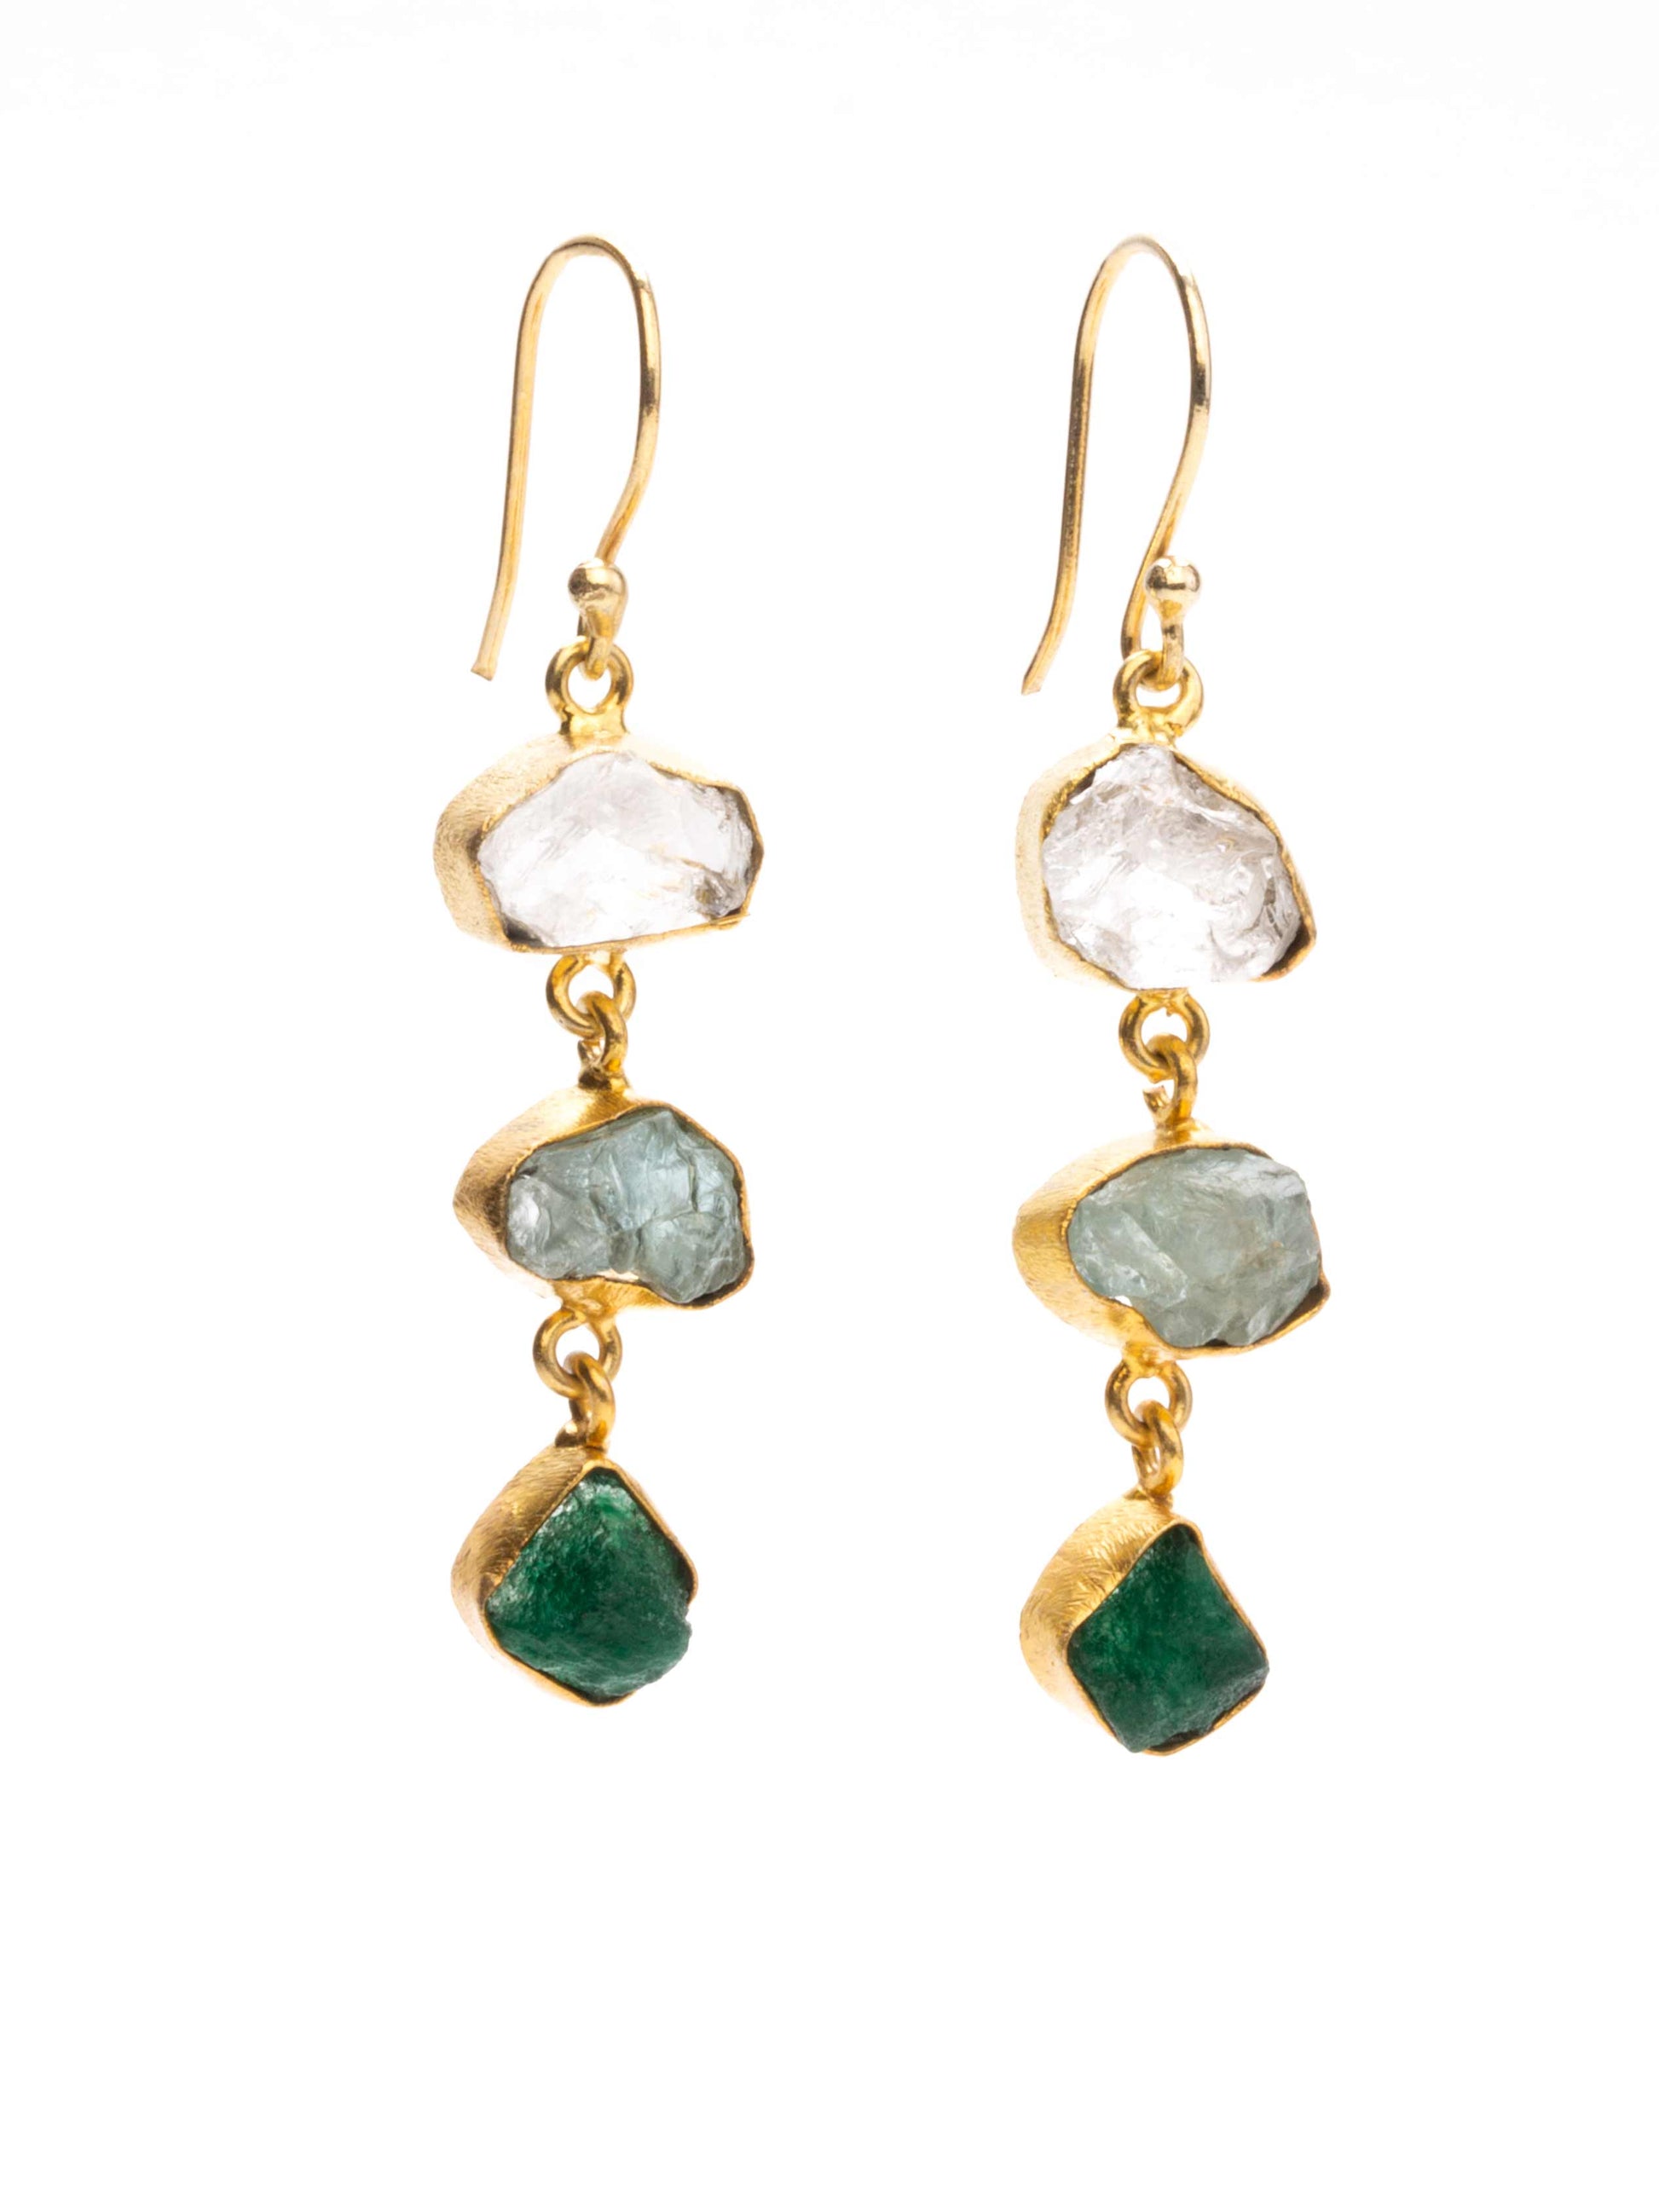 Gold Luxe earrings - triple drop gems quartz, aqua marine & aventurine